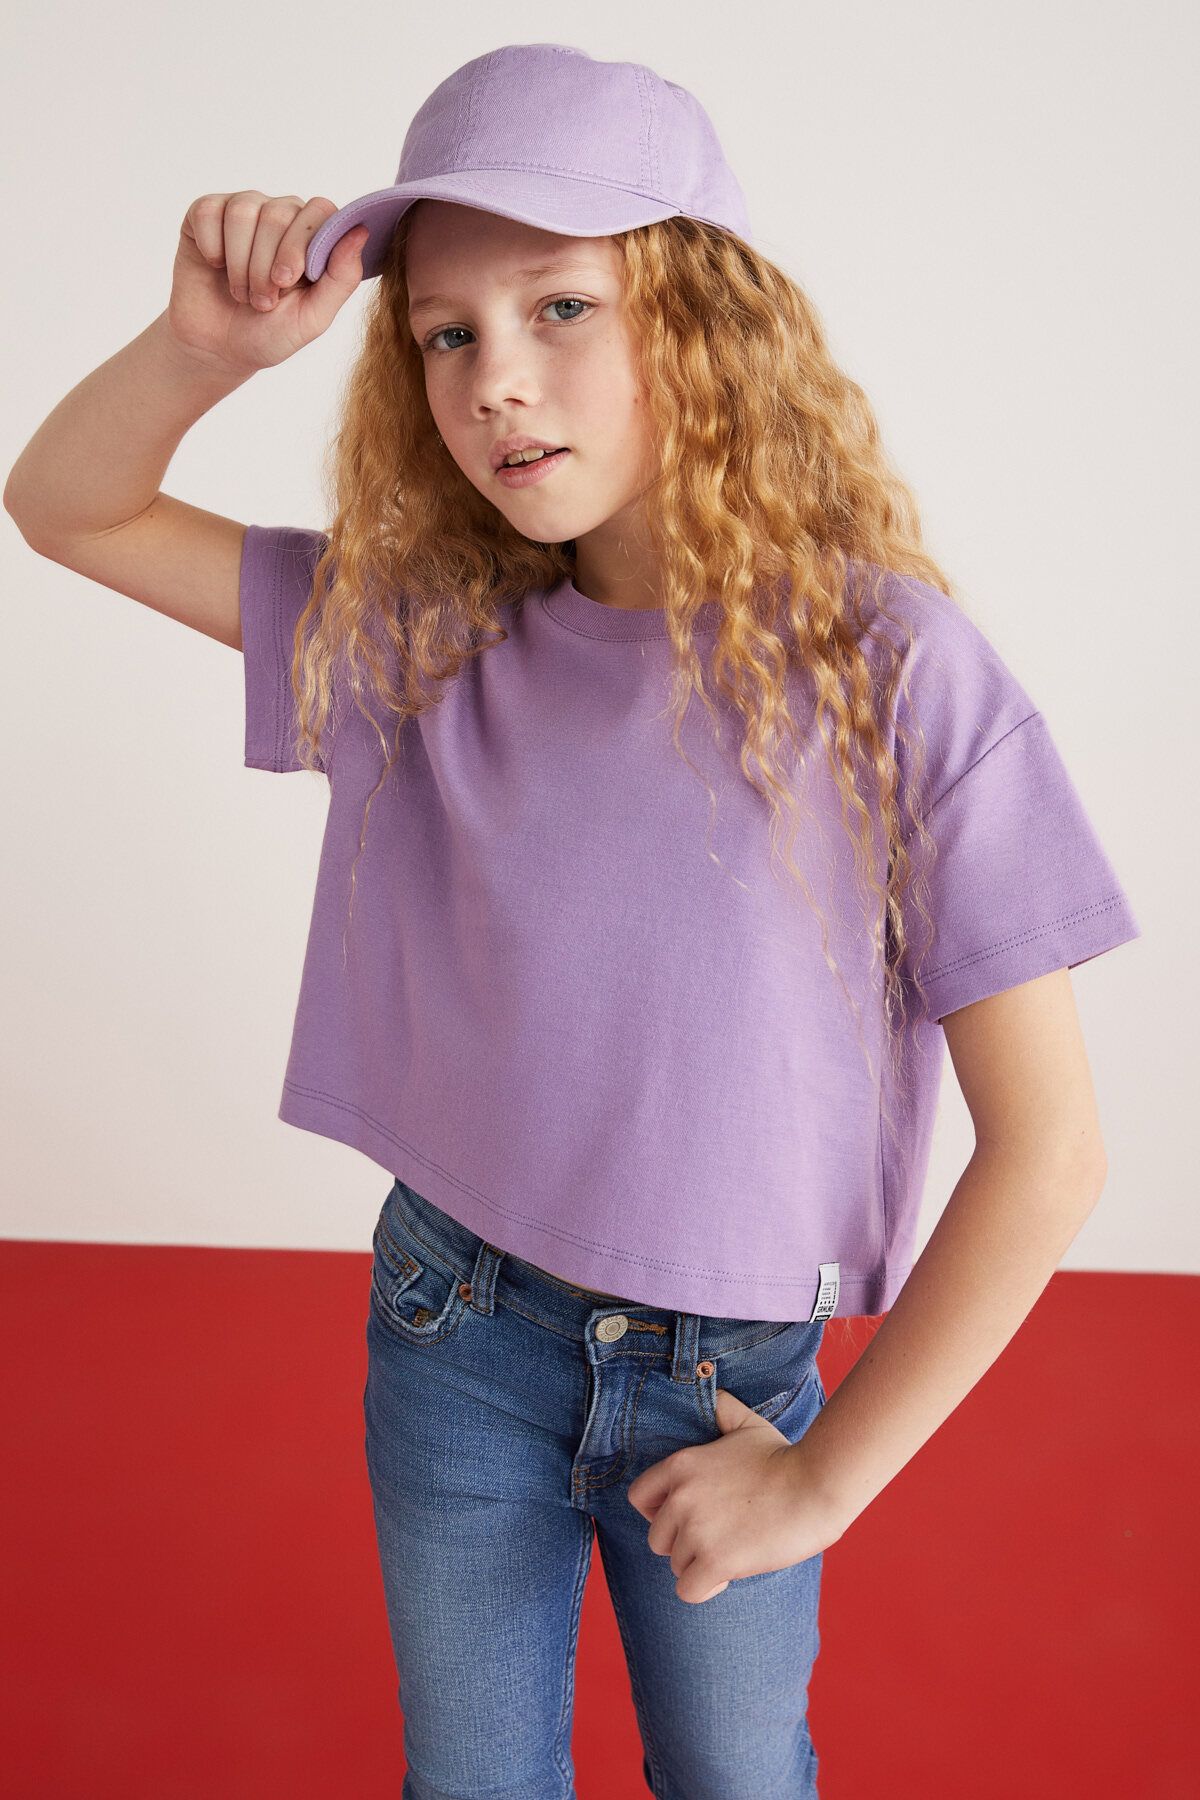 GRIMELANGE HEIDA-GRM24022- 100% pamuk süs etiletli kız çocuk kısa kollu tshirt çocuk tshirt Mor T-Shirt